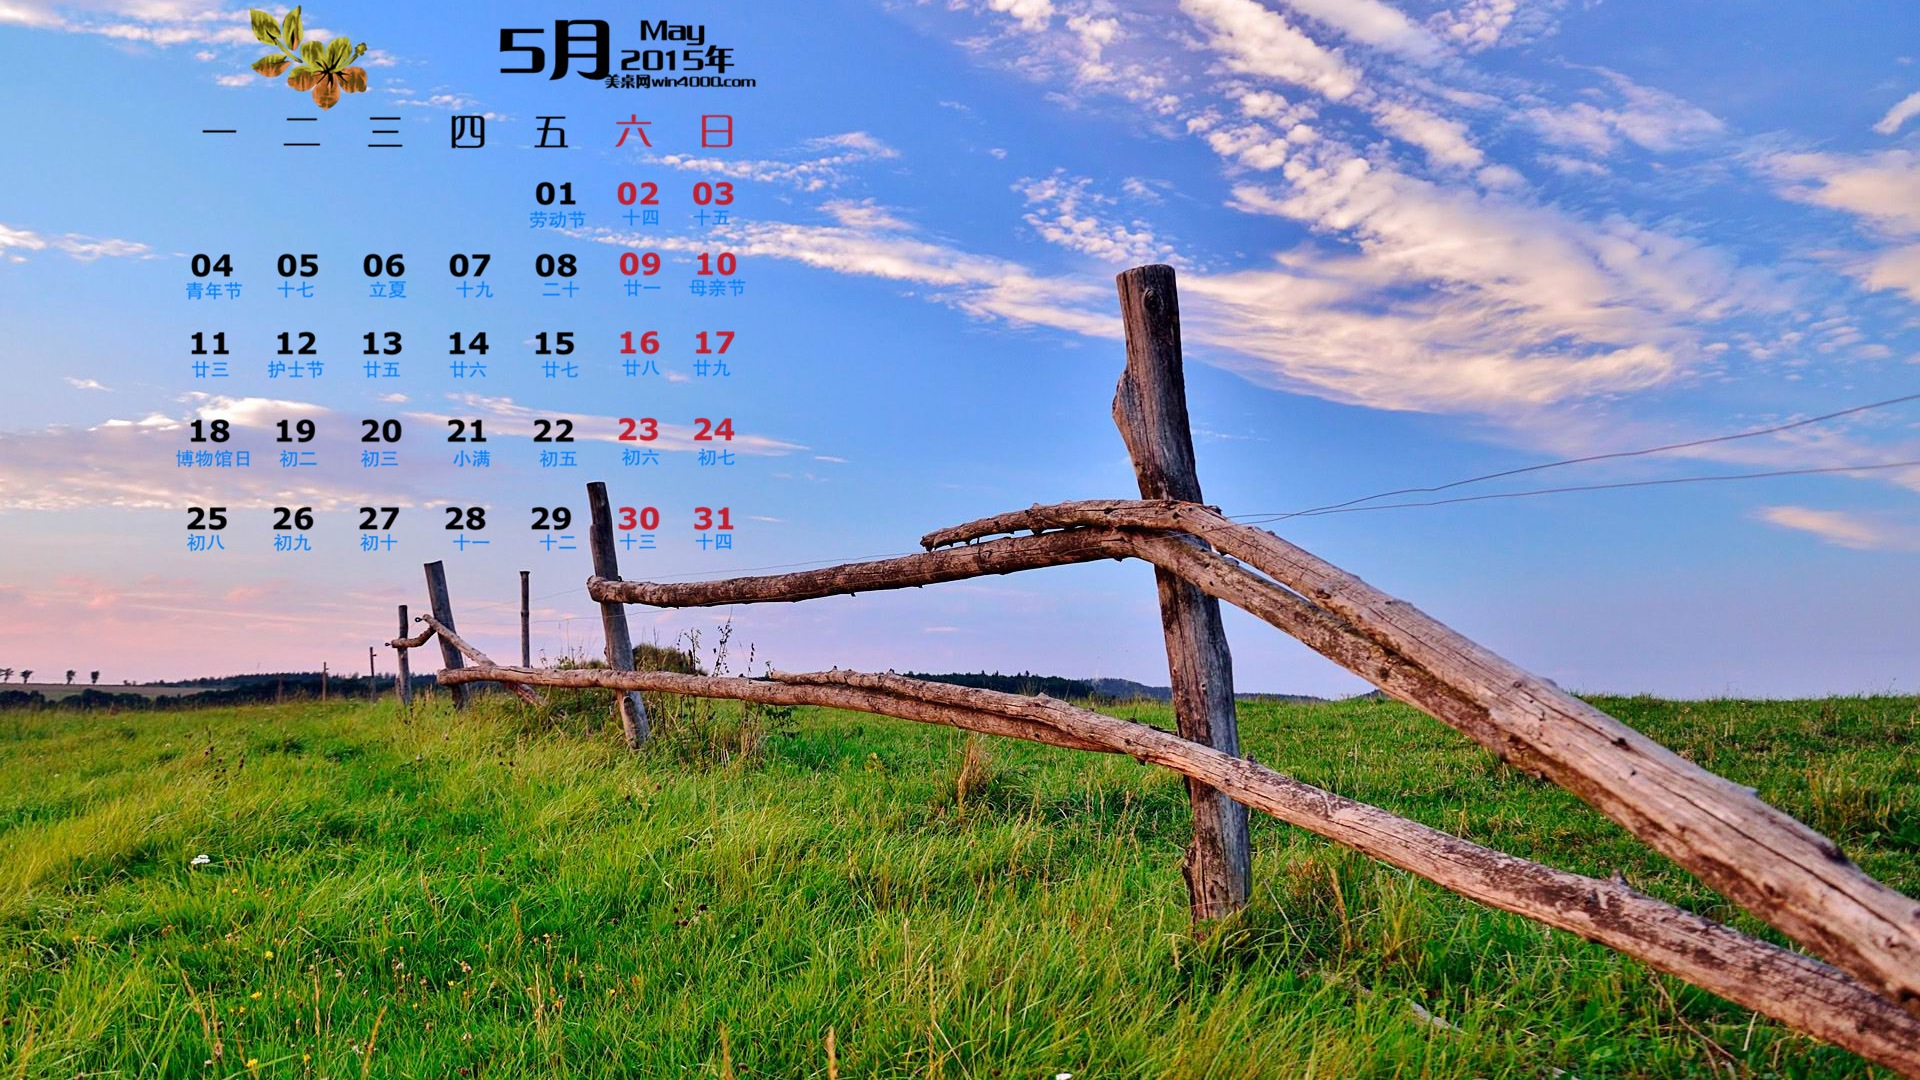 Mai 2015 calendar fond d'écran (1) #9 - 1920x1080